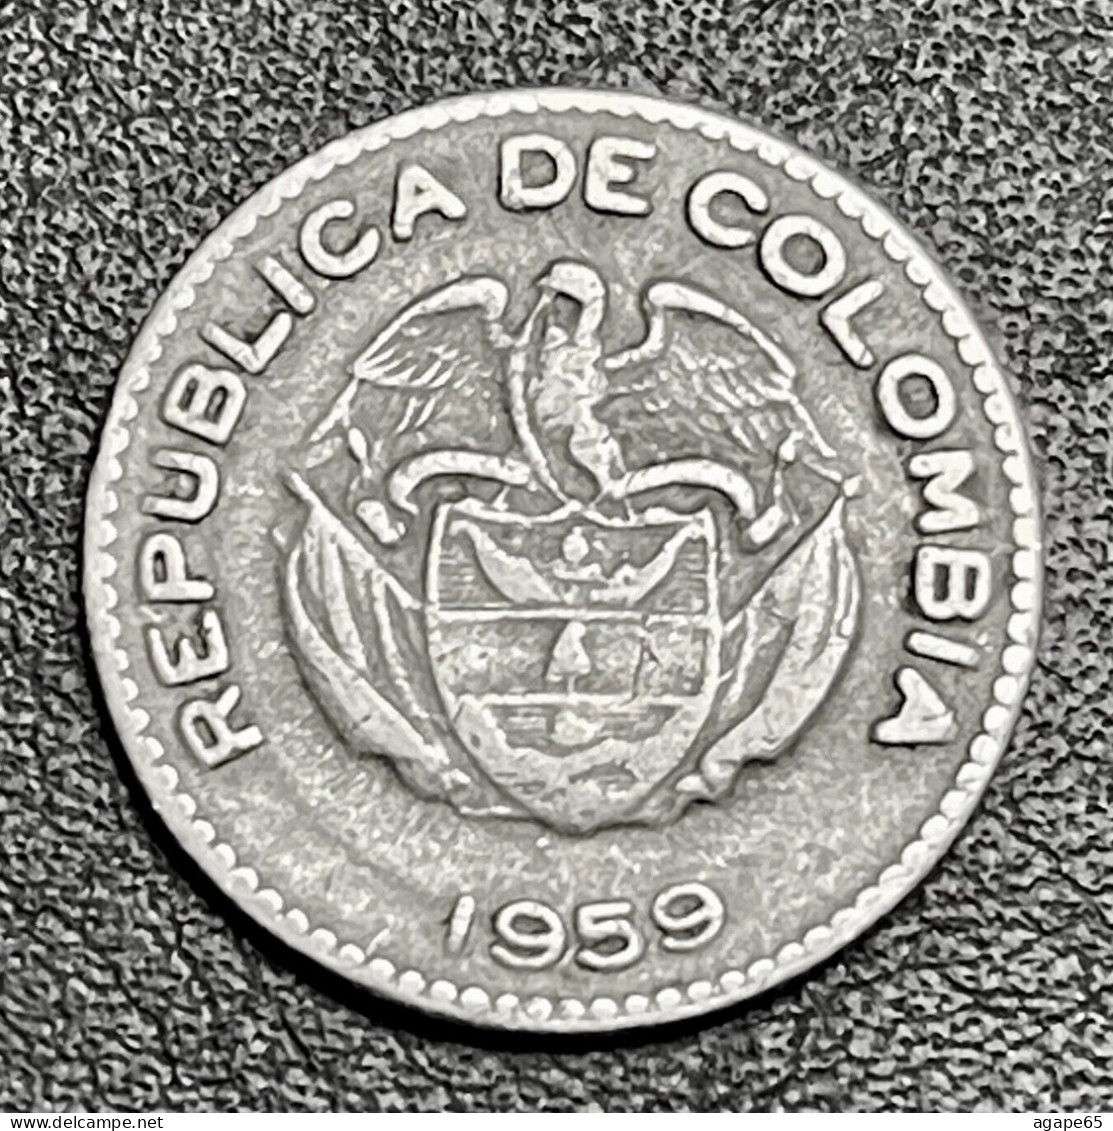 10 Centavos, Colombia, 1959 - Colombie